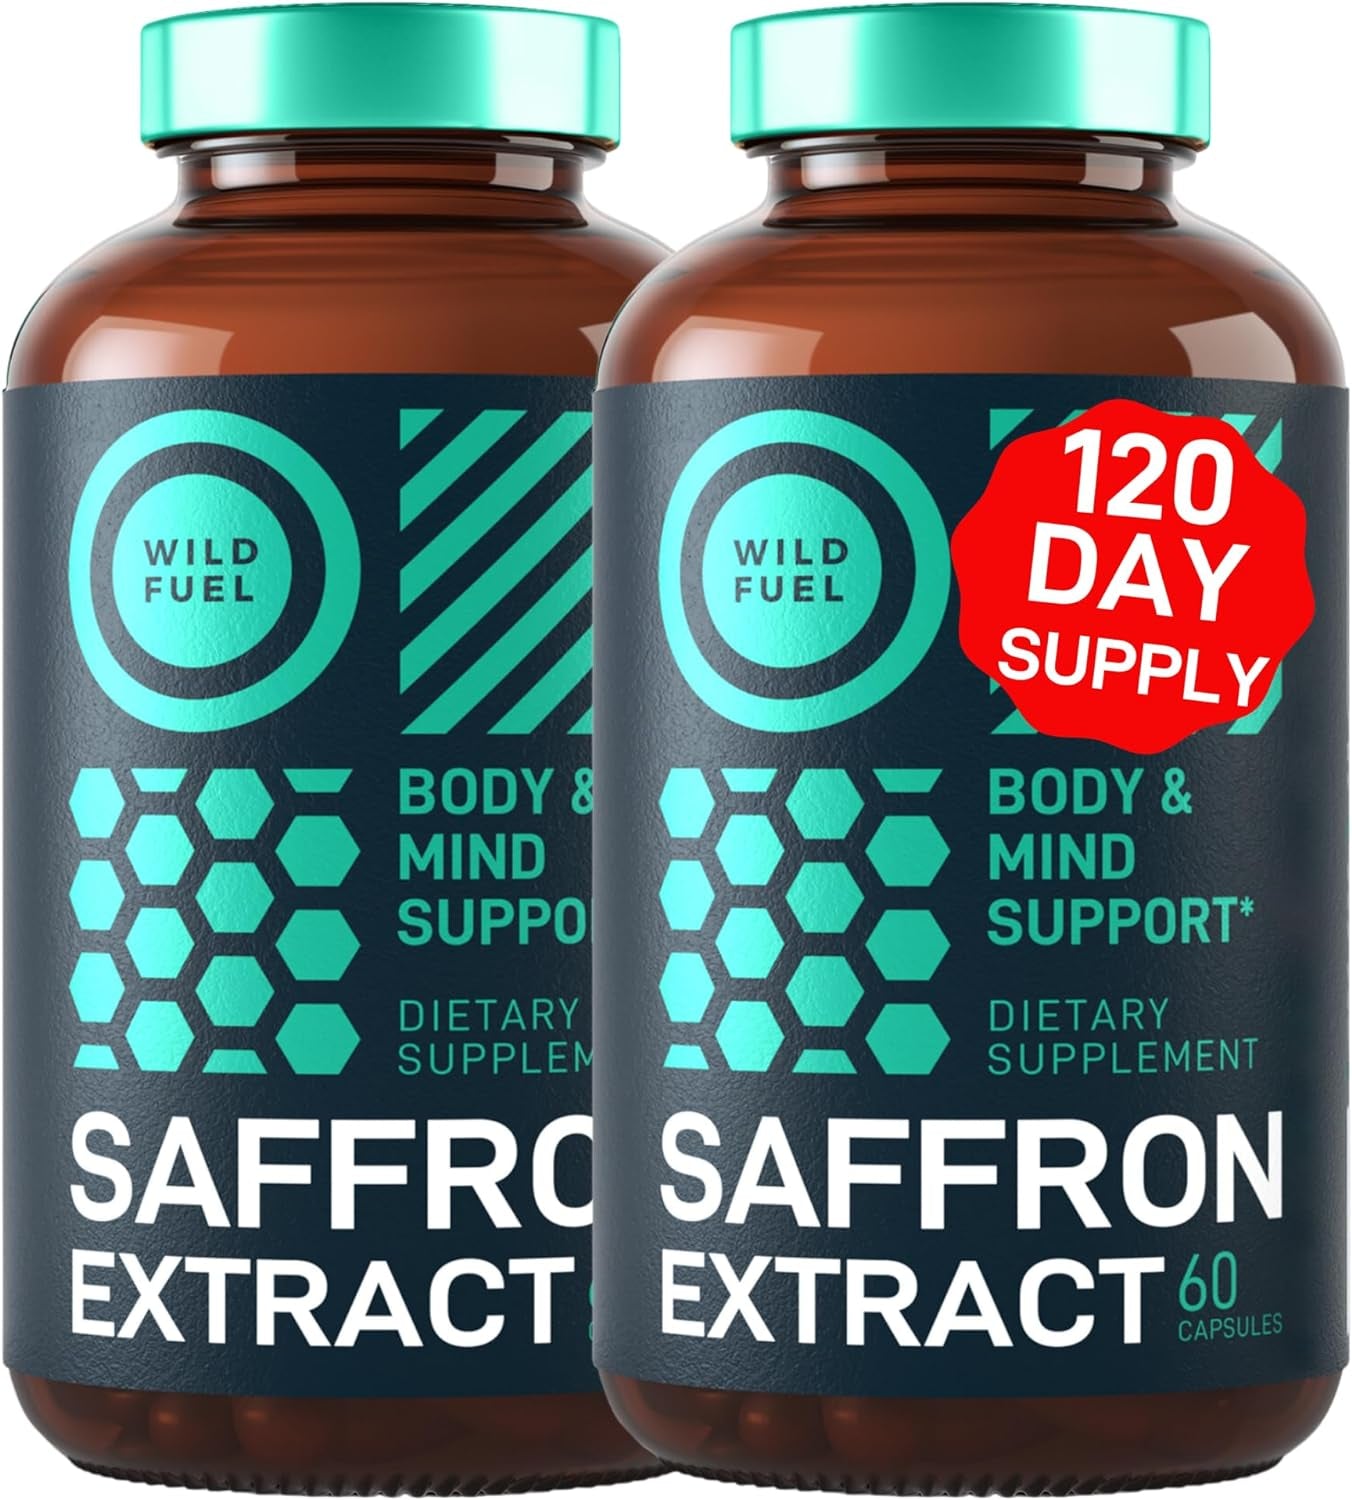 Pure Saffron Extract Antioxidants Supplement - Eye Health, Energy and Mood Support Happy Saffron - 0.3% Safranal 88.5Mg Organic Saffron Supplements -120 Day Gluten-Free, Non-Gmo Vegan Saffron Capsules